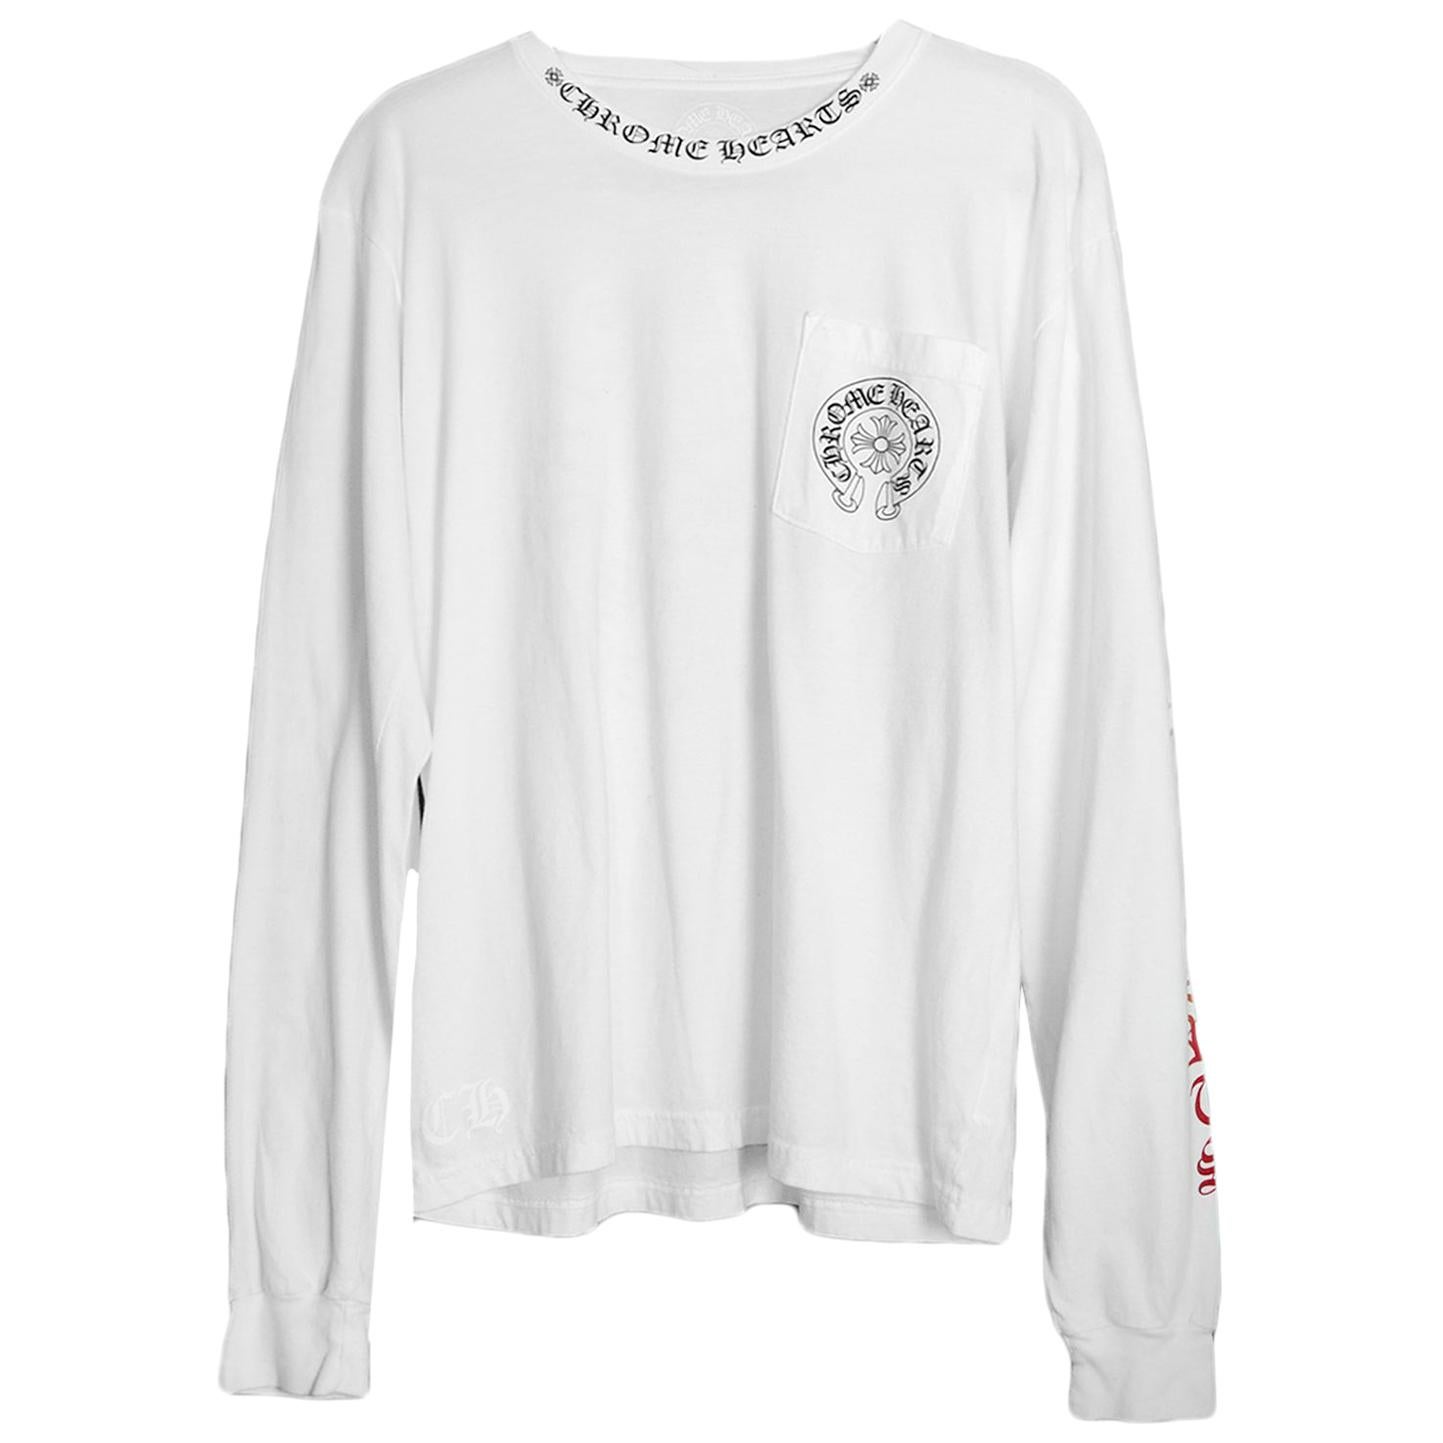 Chrome Hearts Men's/Unisex White Cotton Longsleeve T-Shirt w/ Logo sz L